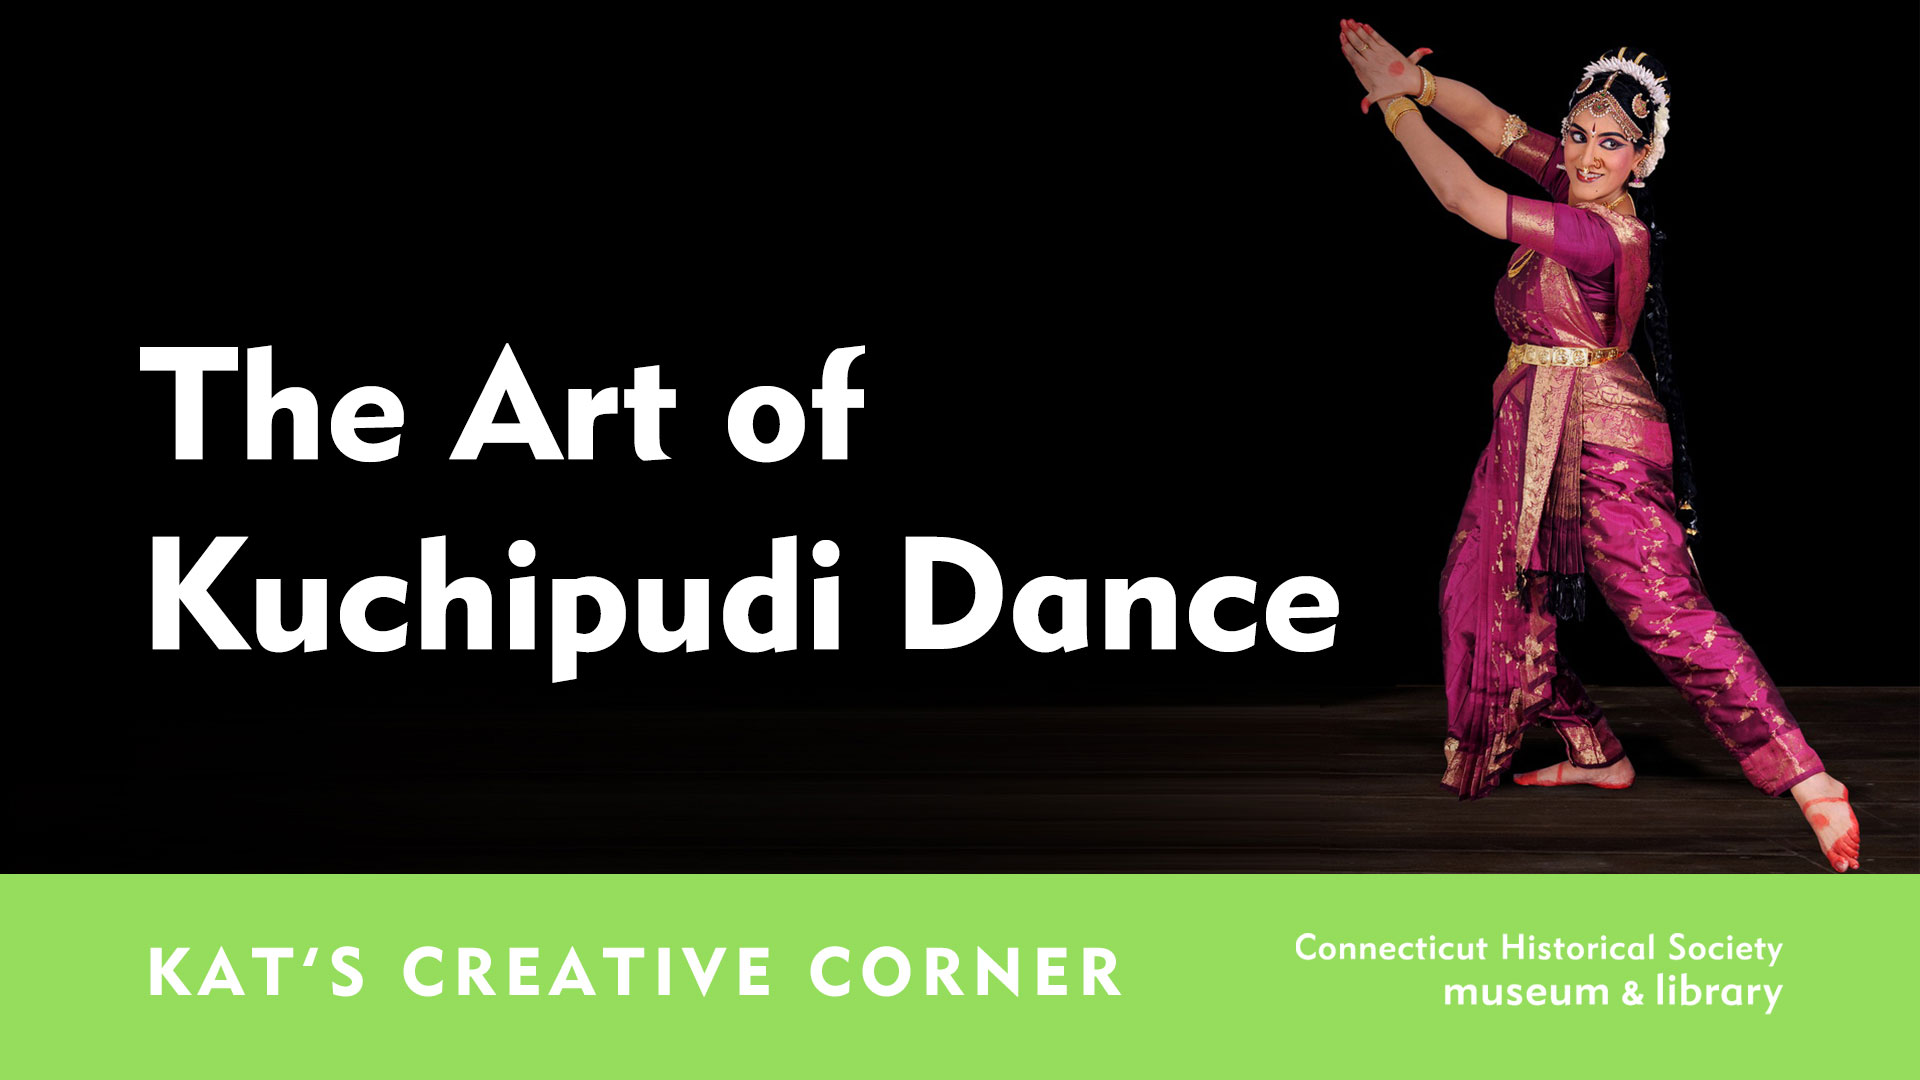 Kat’s Creative Corner: The Art of Kuchipudi Dance